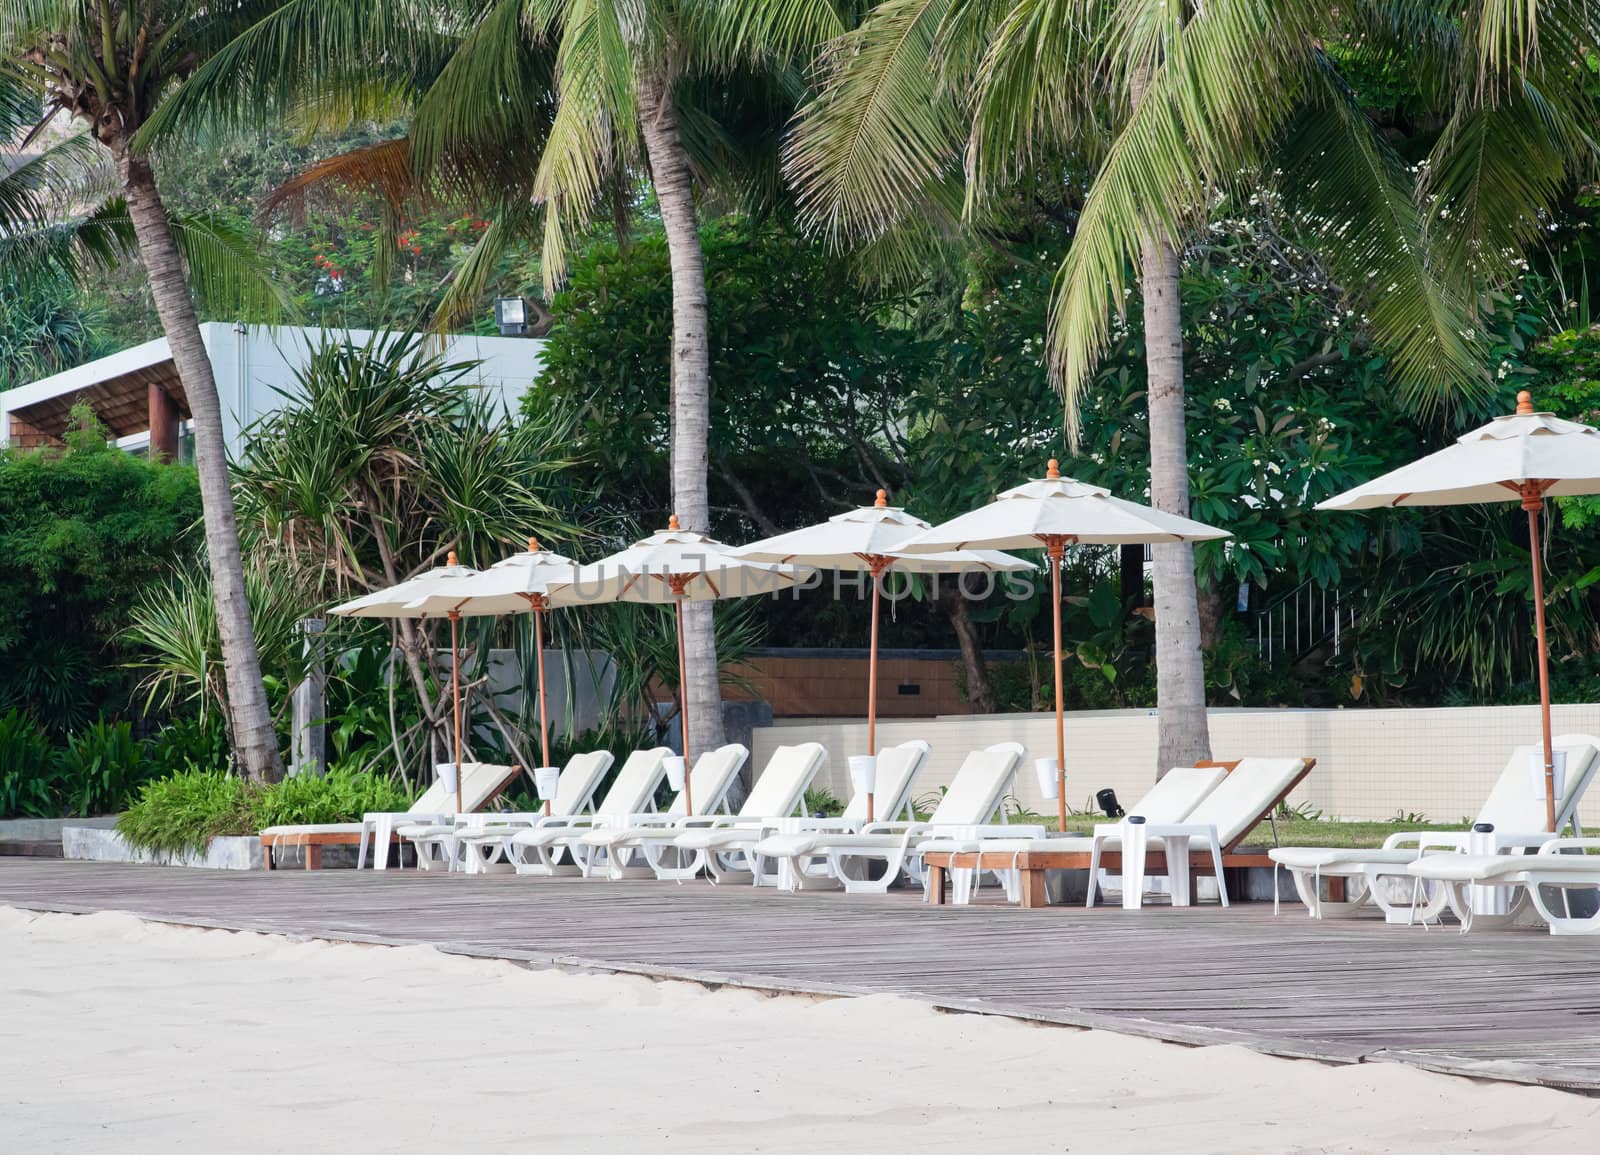 Beach chair and umbrella on tropical sand beach